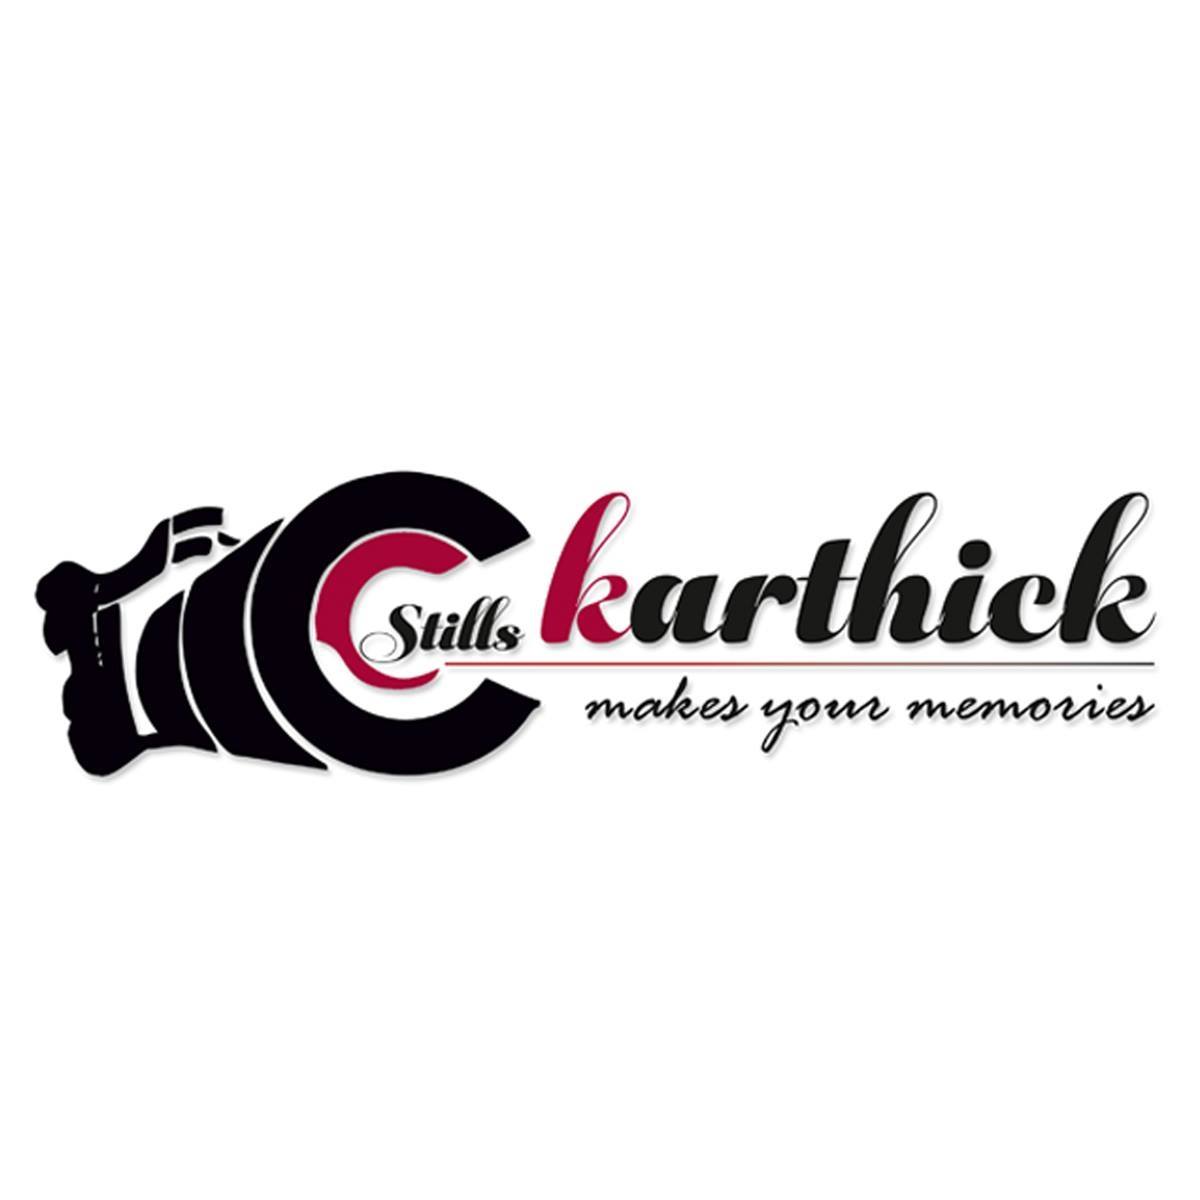 Stills karthick Logo